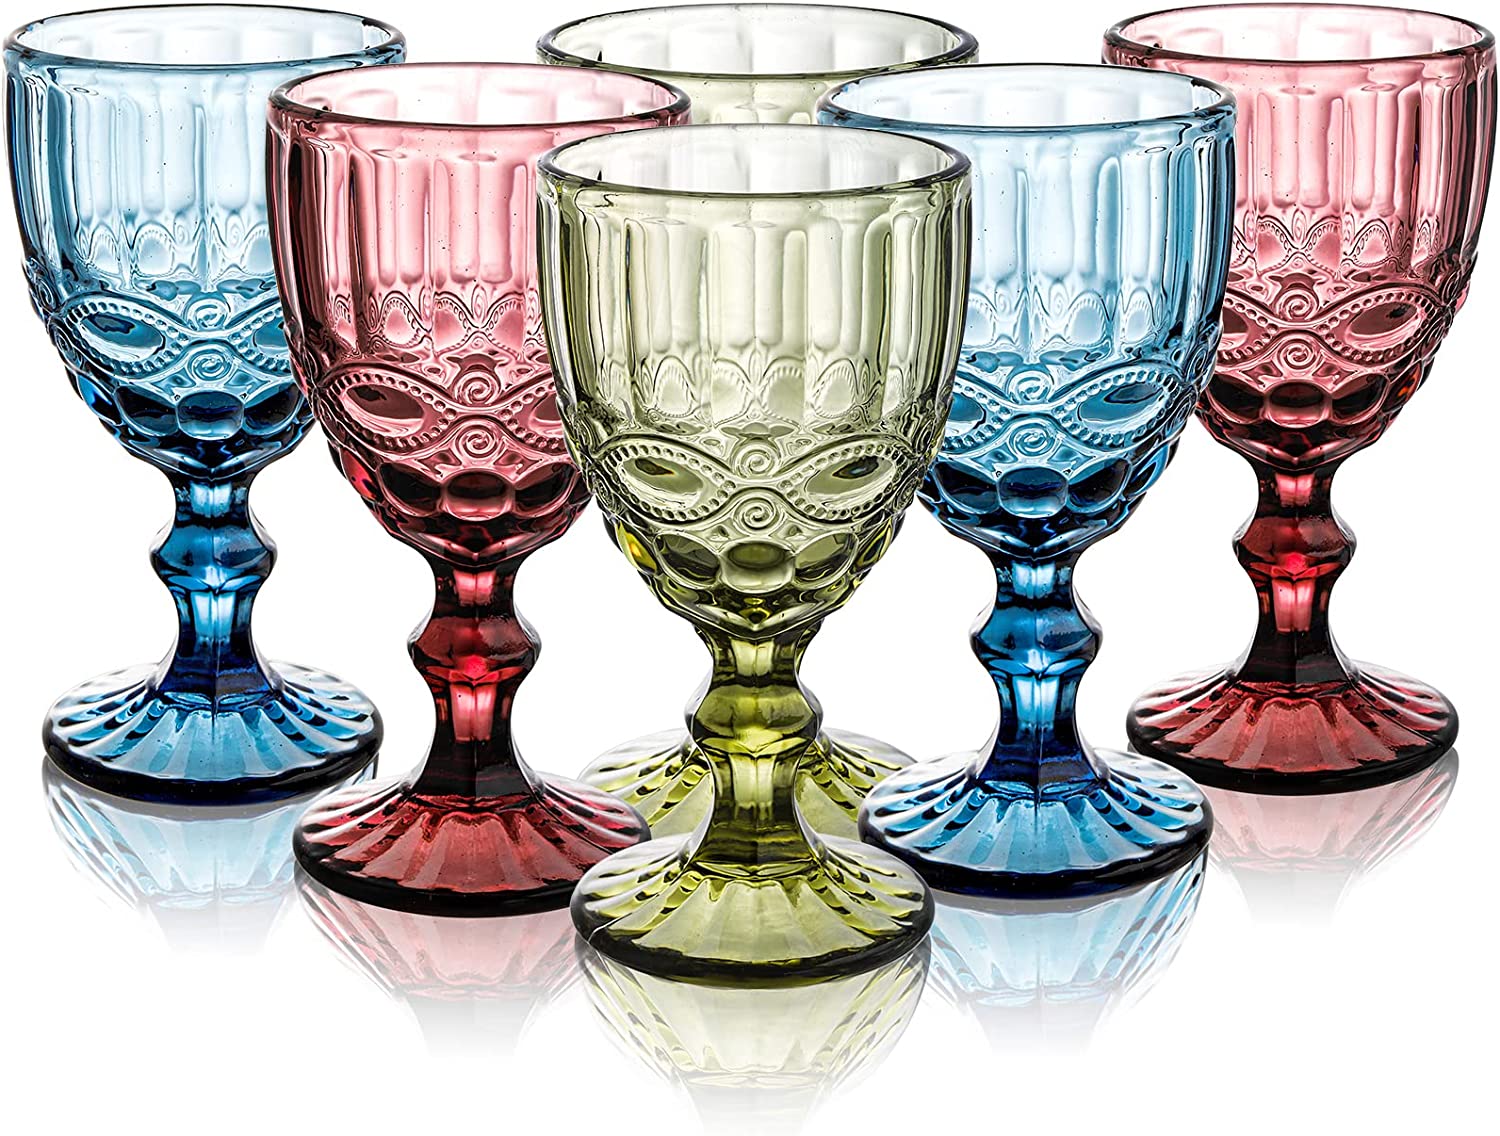 American Atelier Vintage Bubbles 11 Ounce Capacity Wine Glasses Set of 4 Wine Goblets, Vintage Style Glassware, Dishwasher Safe, Blue